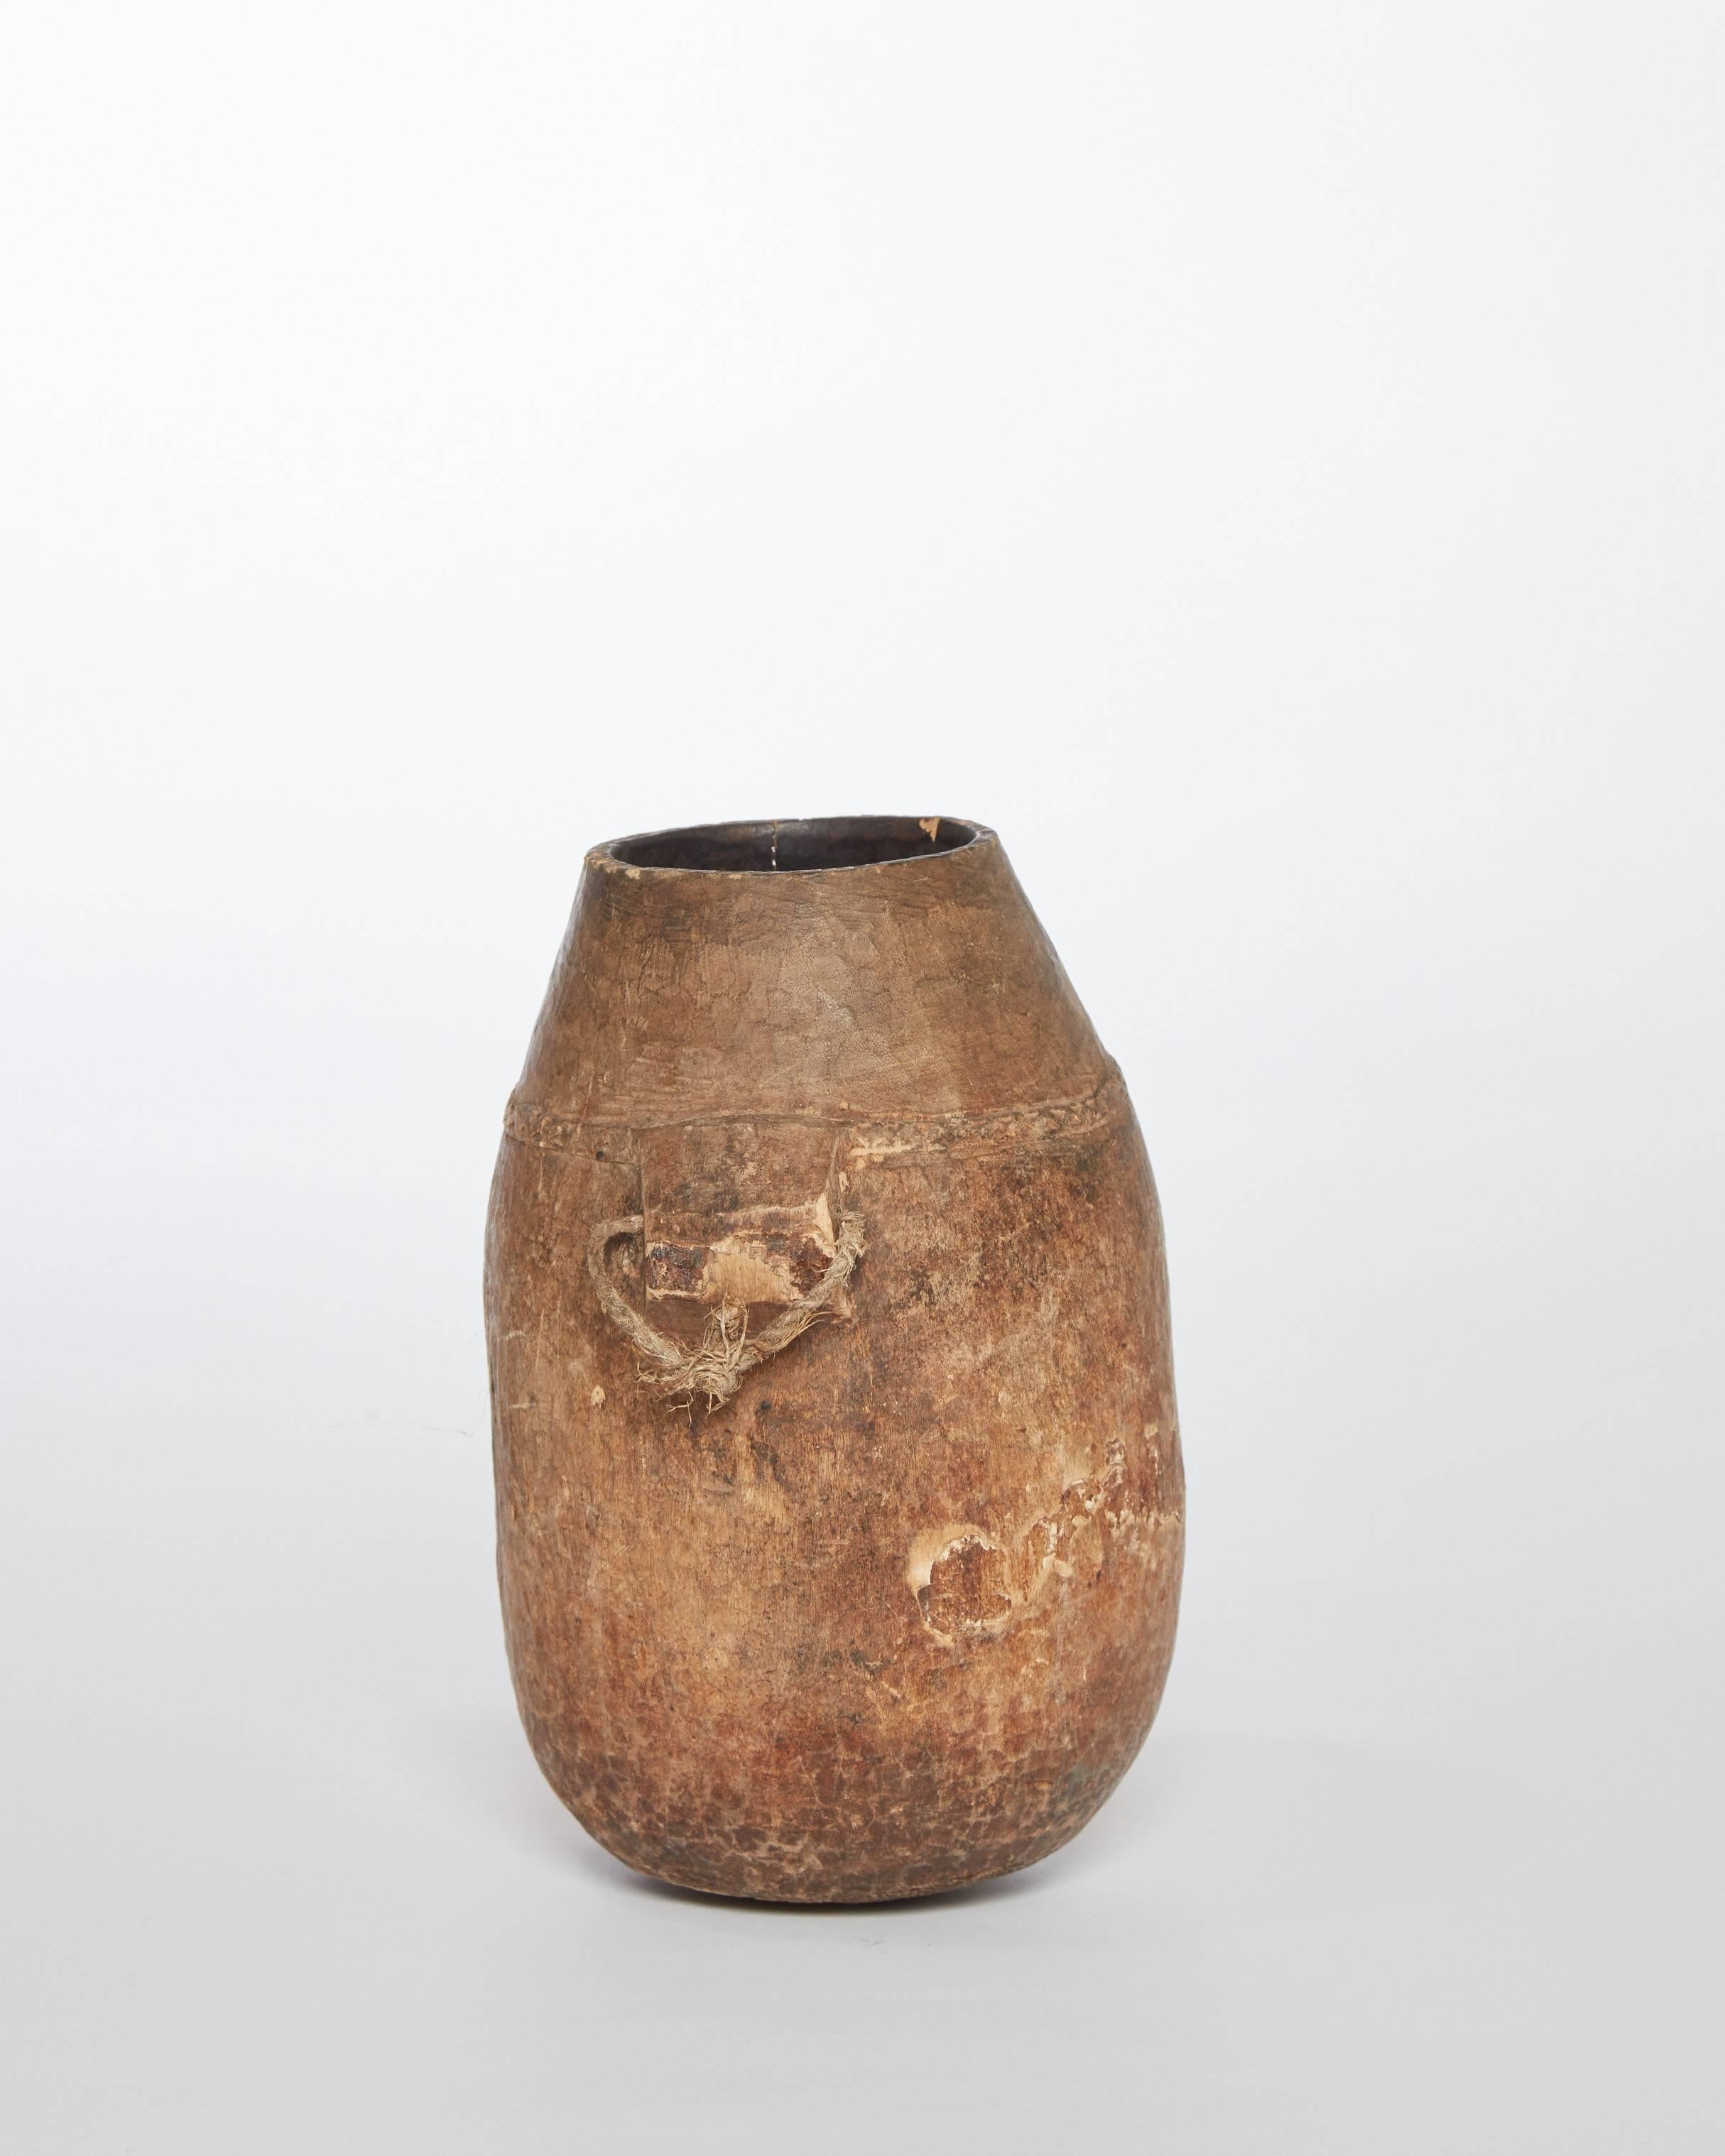 20th century African wooden milk jug
Has character!
 